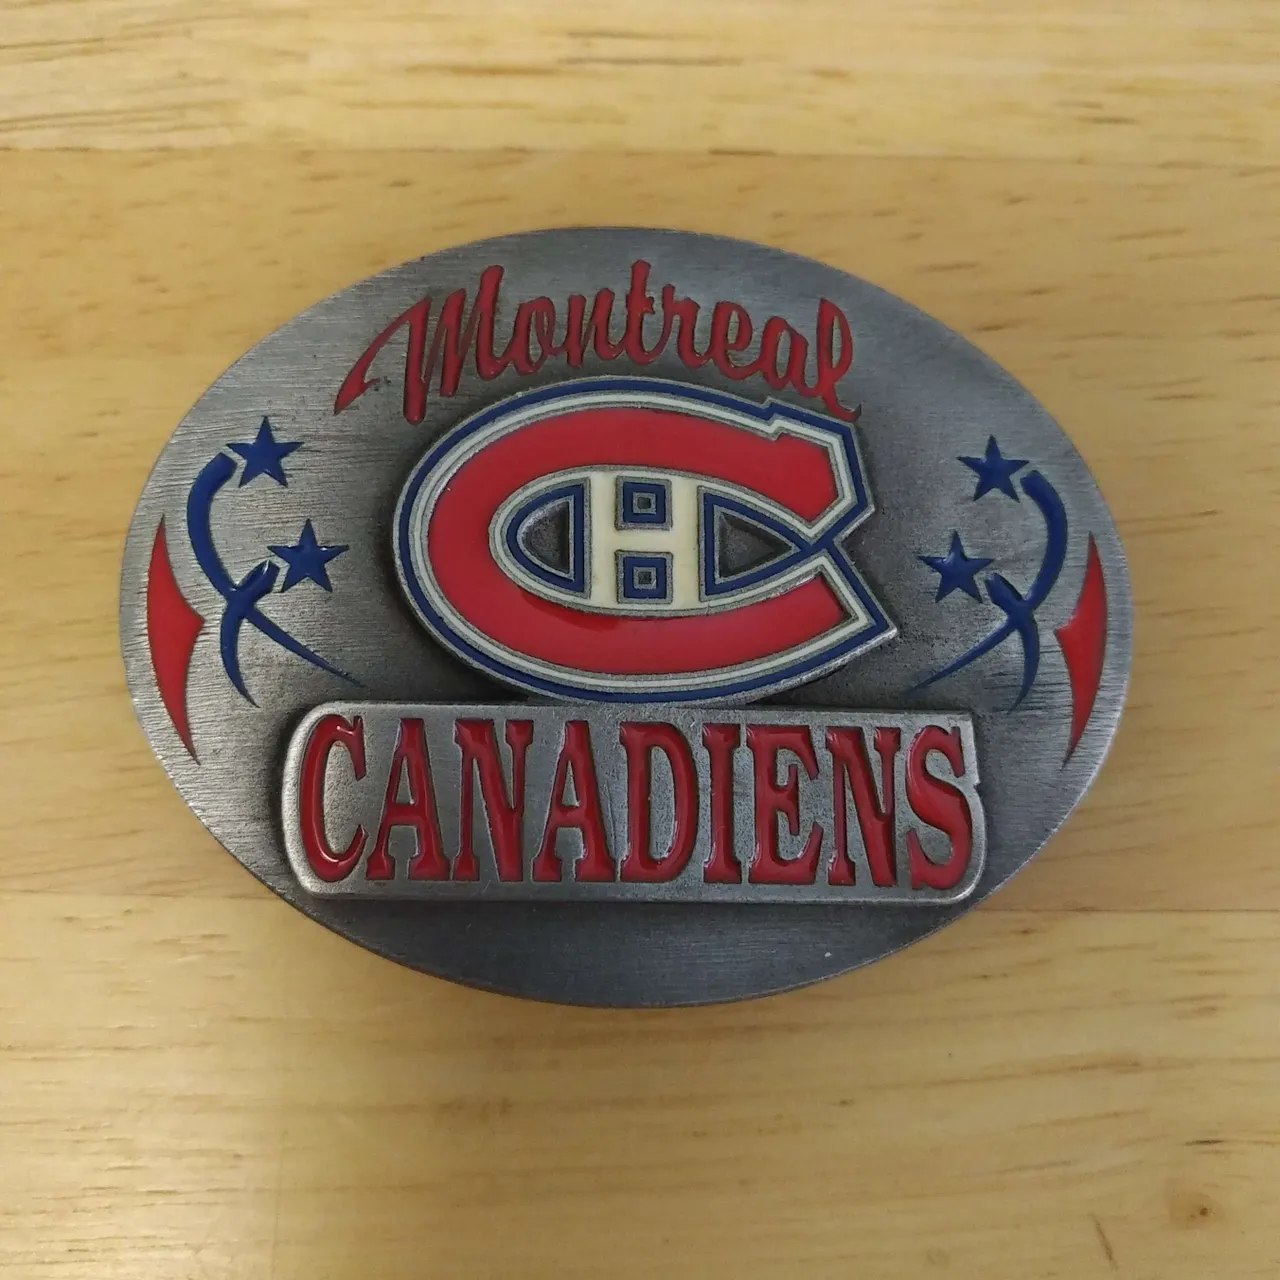 Montreal Canadiens belt buckle photo 1